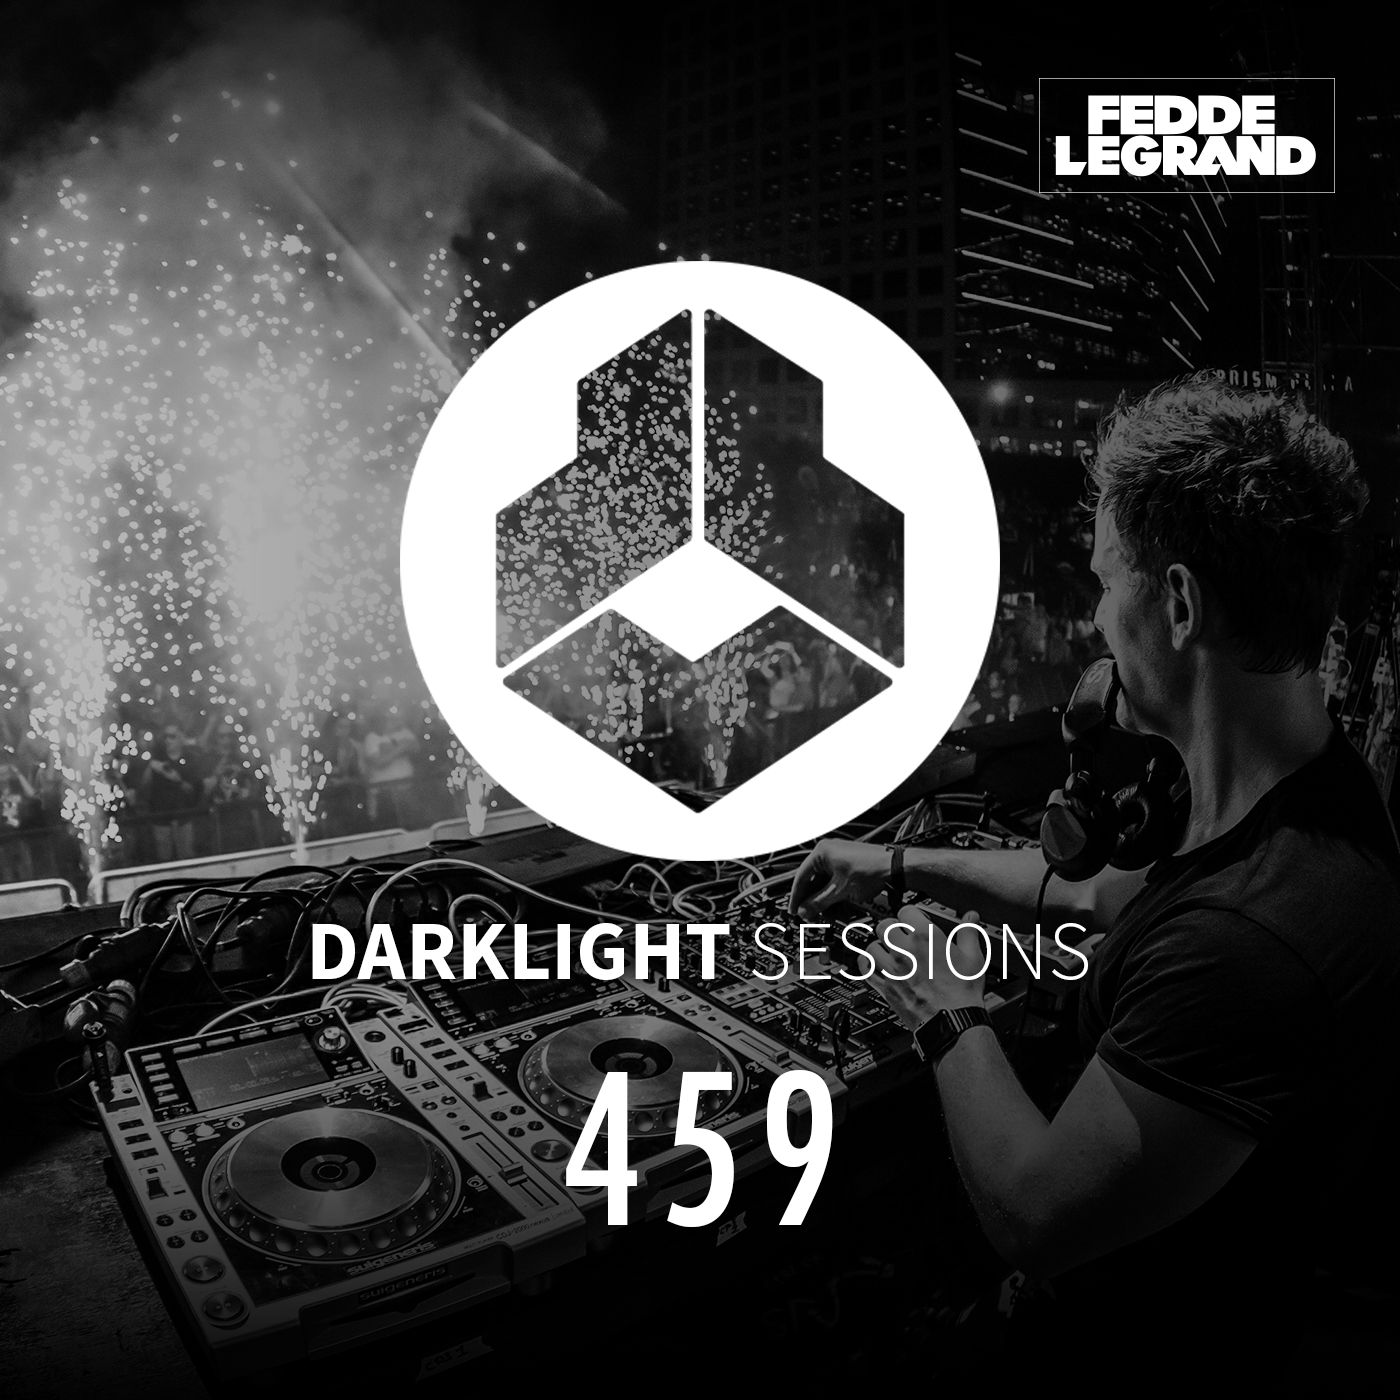 Darklight Sessions 459